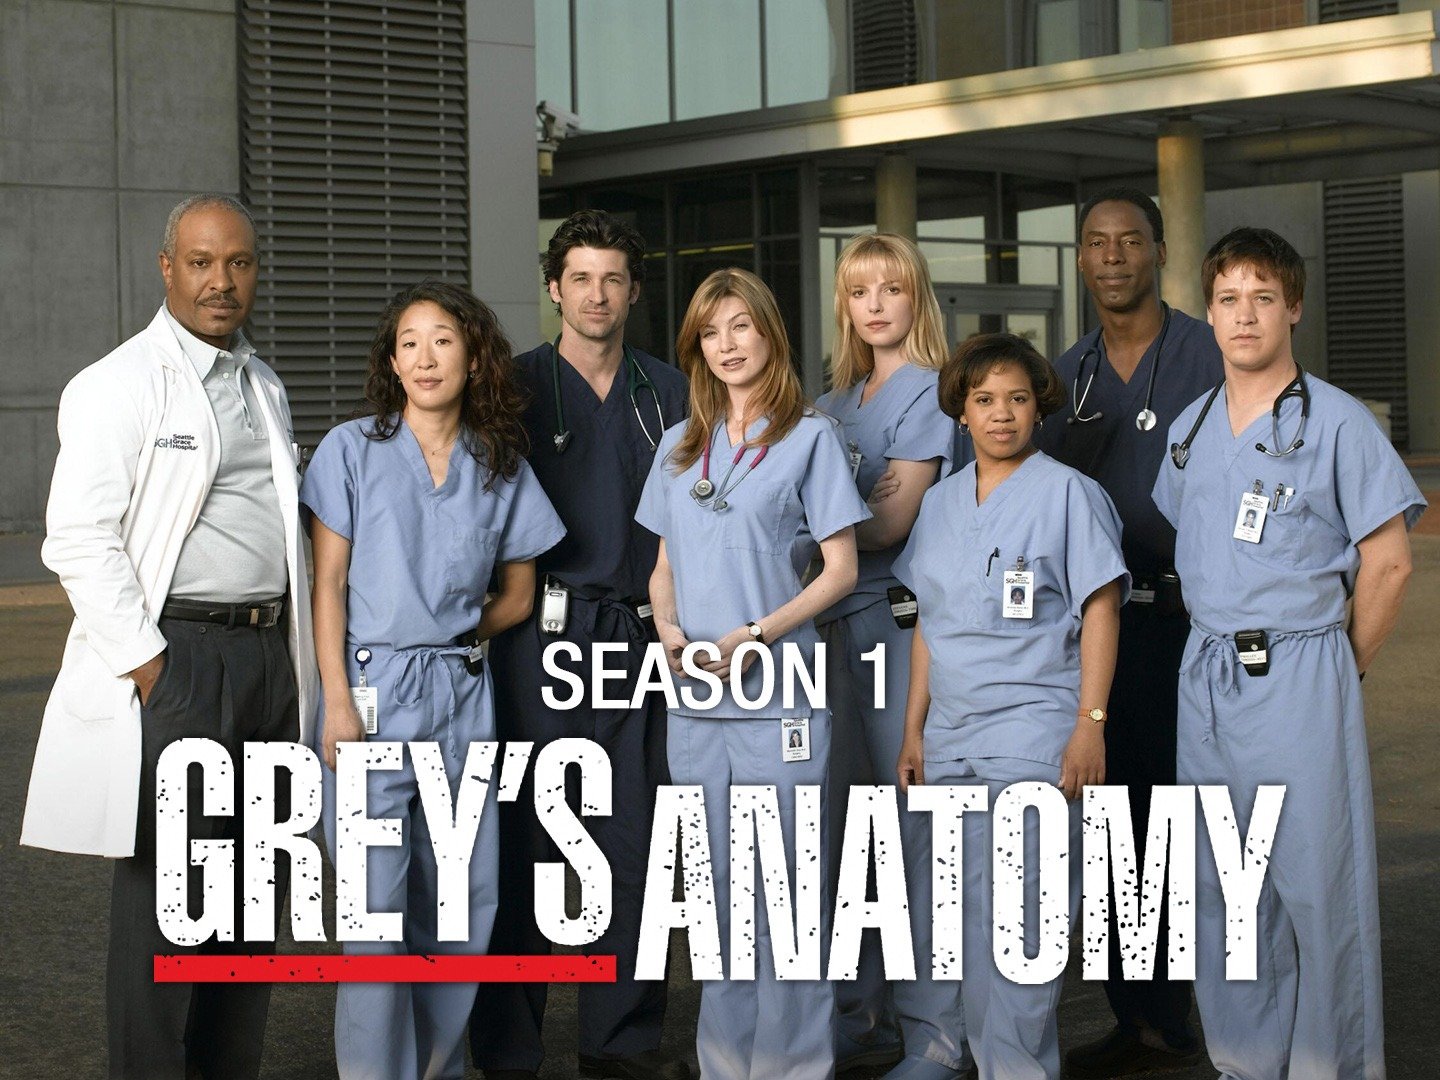 grey anatomy season 1 episode 8